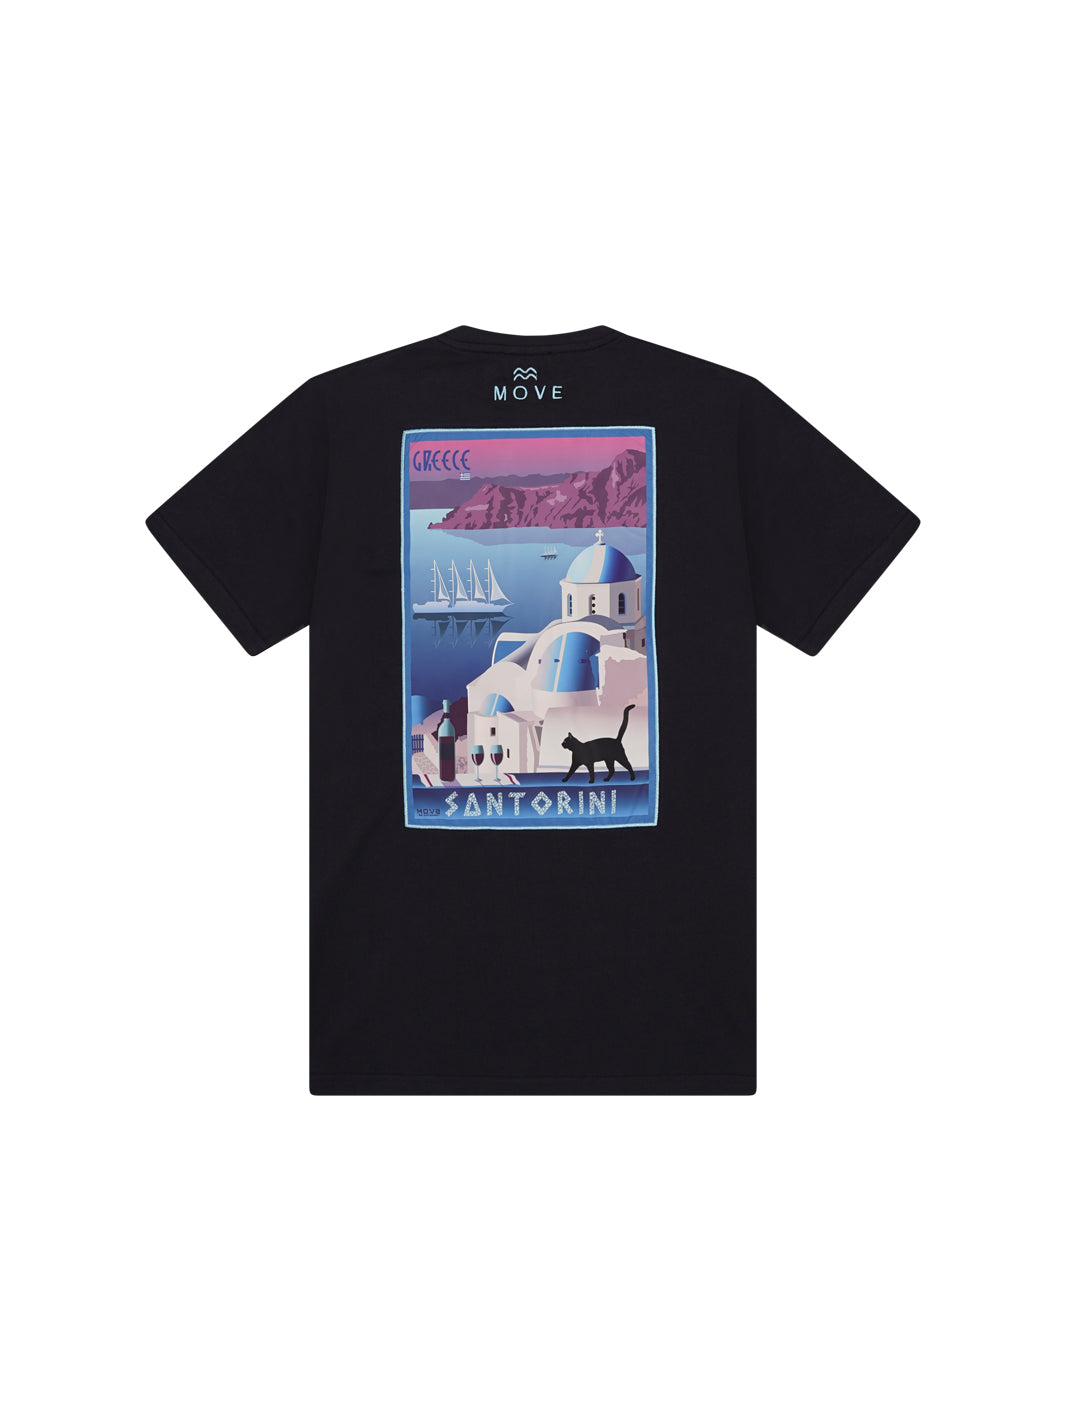 TS Print Boy Santorini - T-Shirt - Move Beachwear